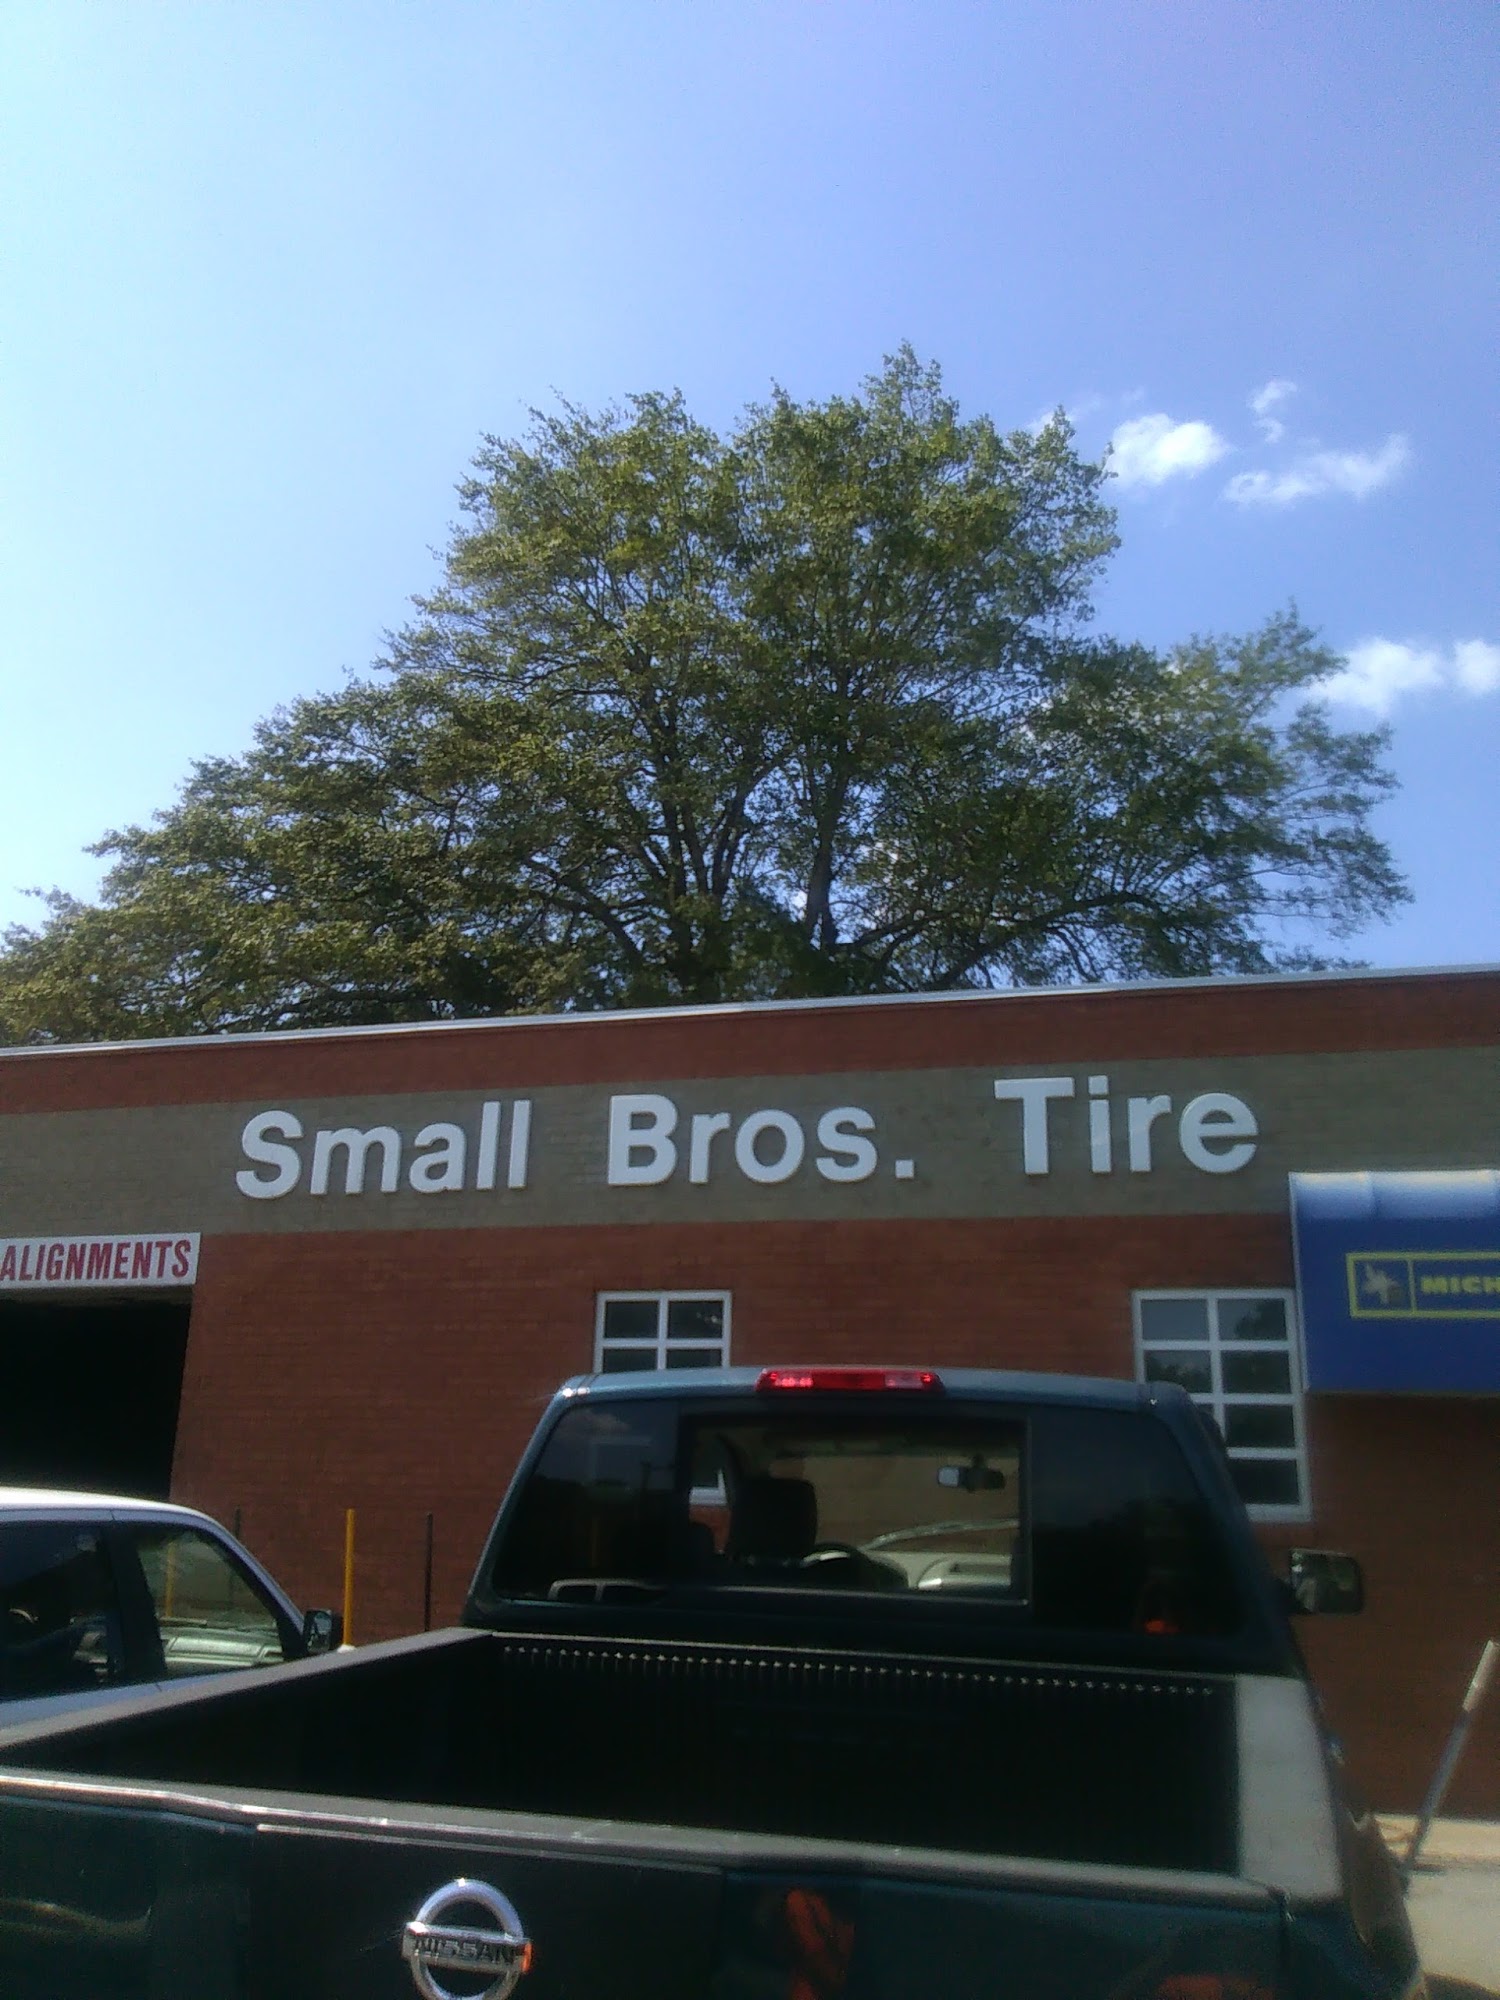 Small Bros. Tire